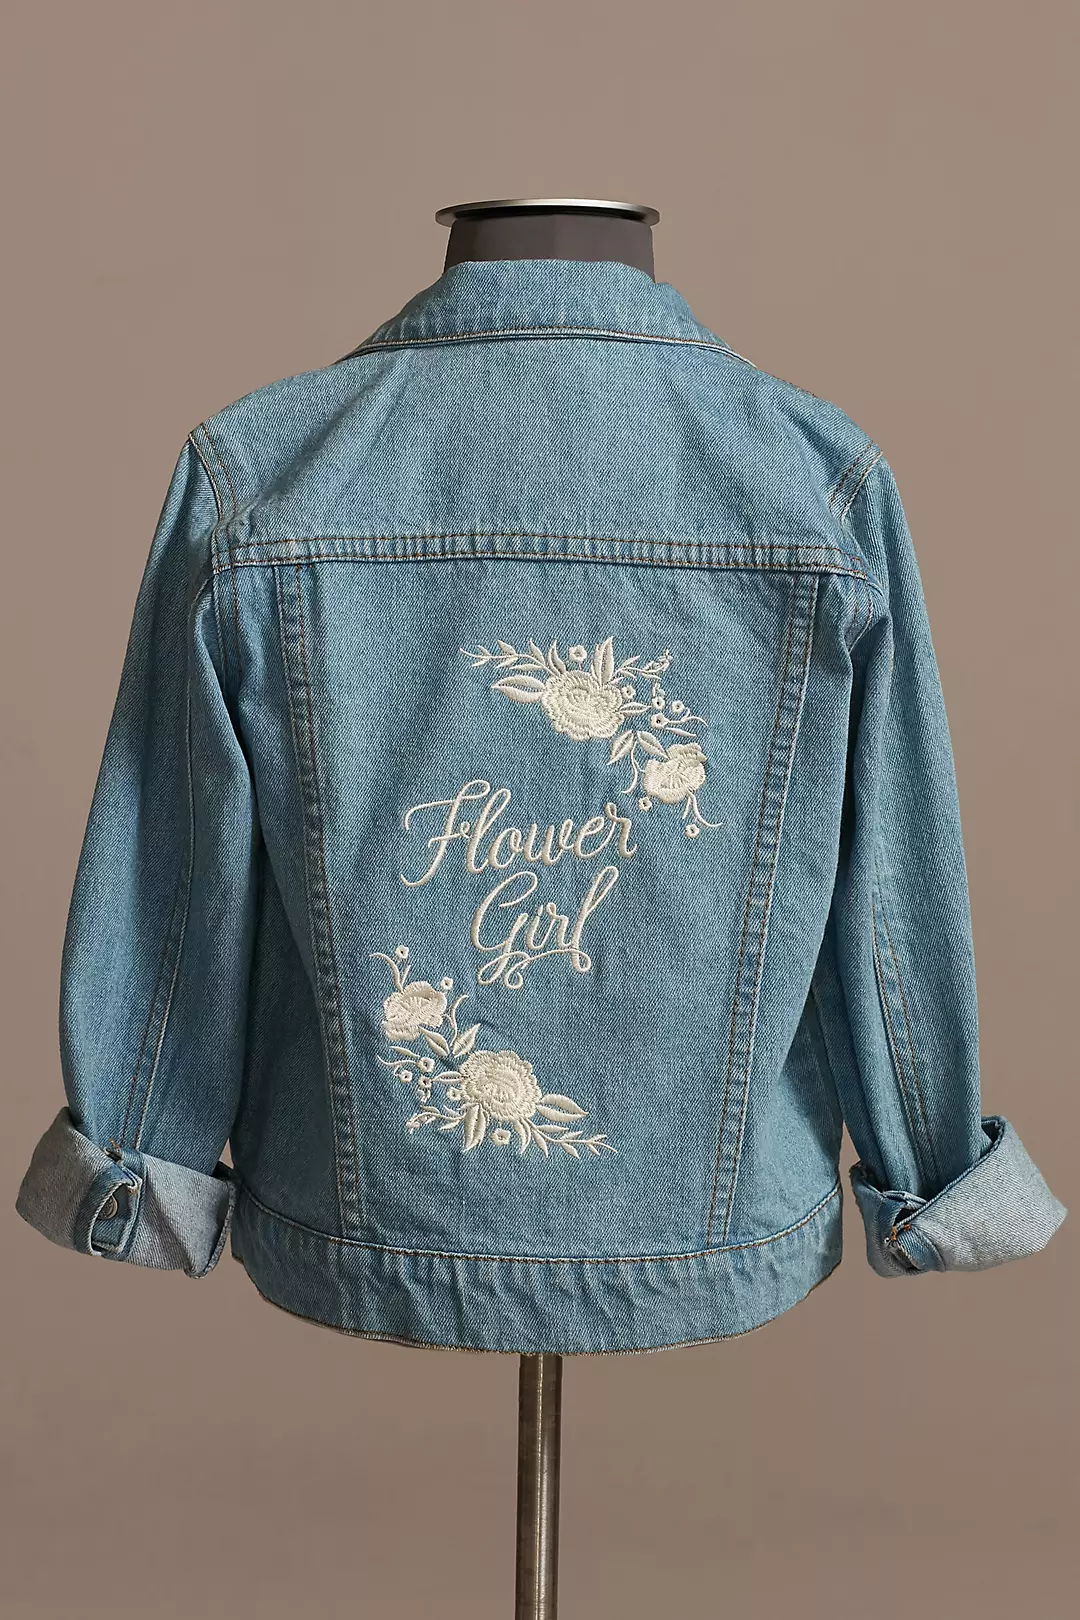 Embroidered Flower Girl Jean Jacket Image